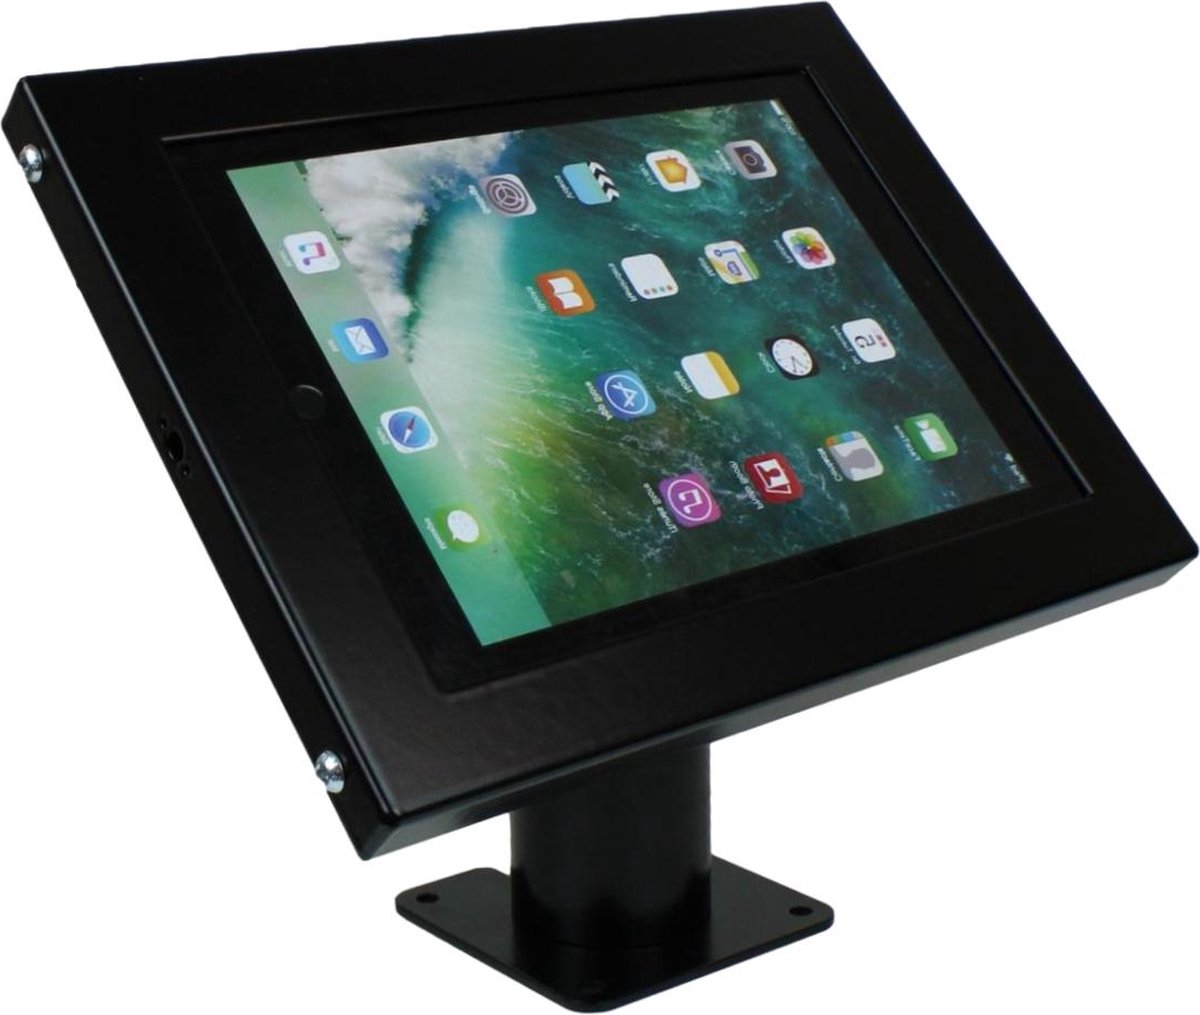 Tablethouder - tabletstandaard - standaard tablet - ipad houder - tablet tafelstandaard - houder voor tablet - voor tablets tussen 13-16 inch - zwart